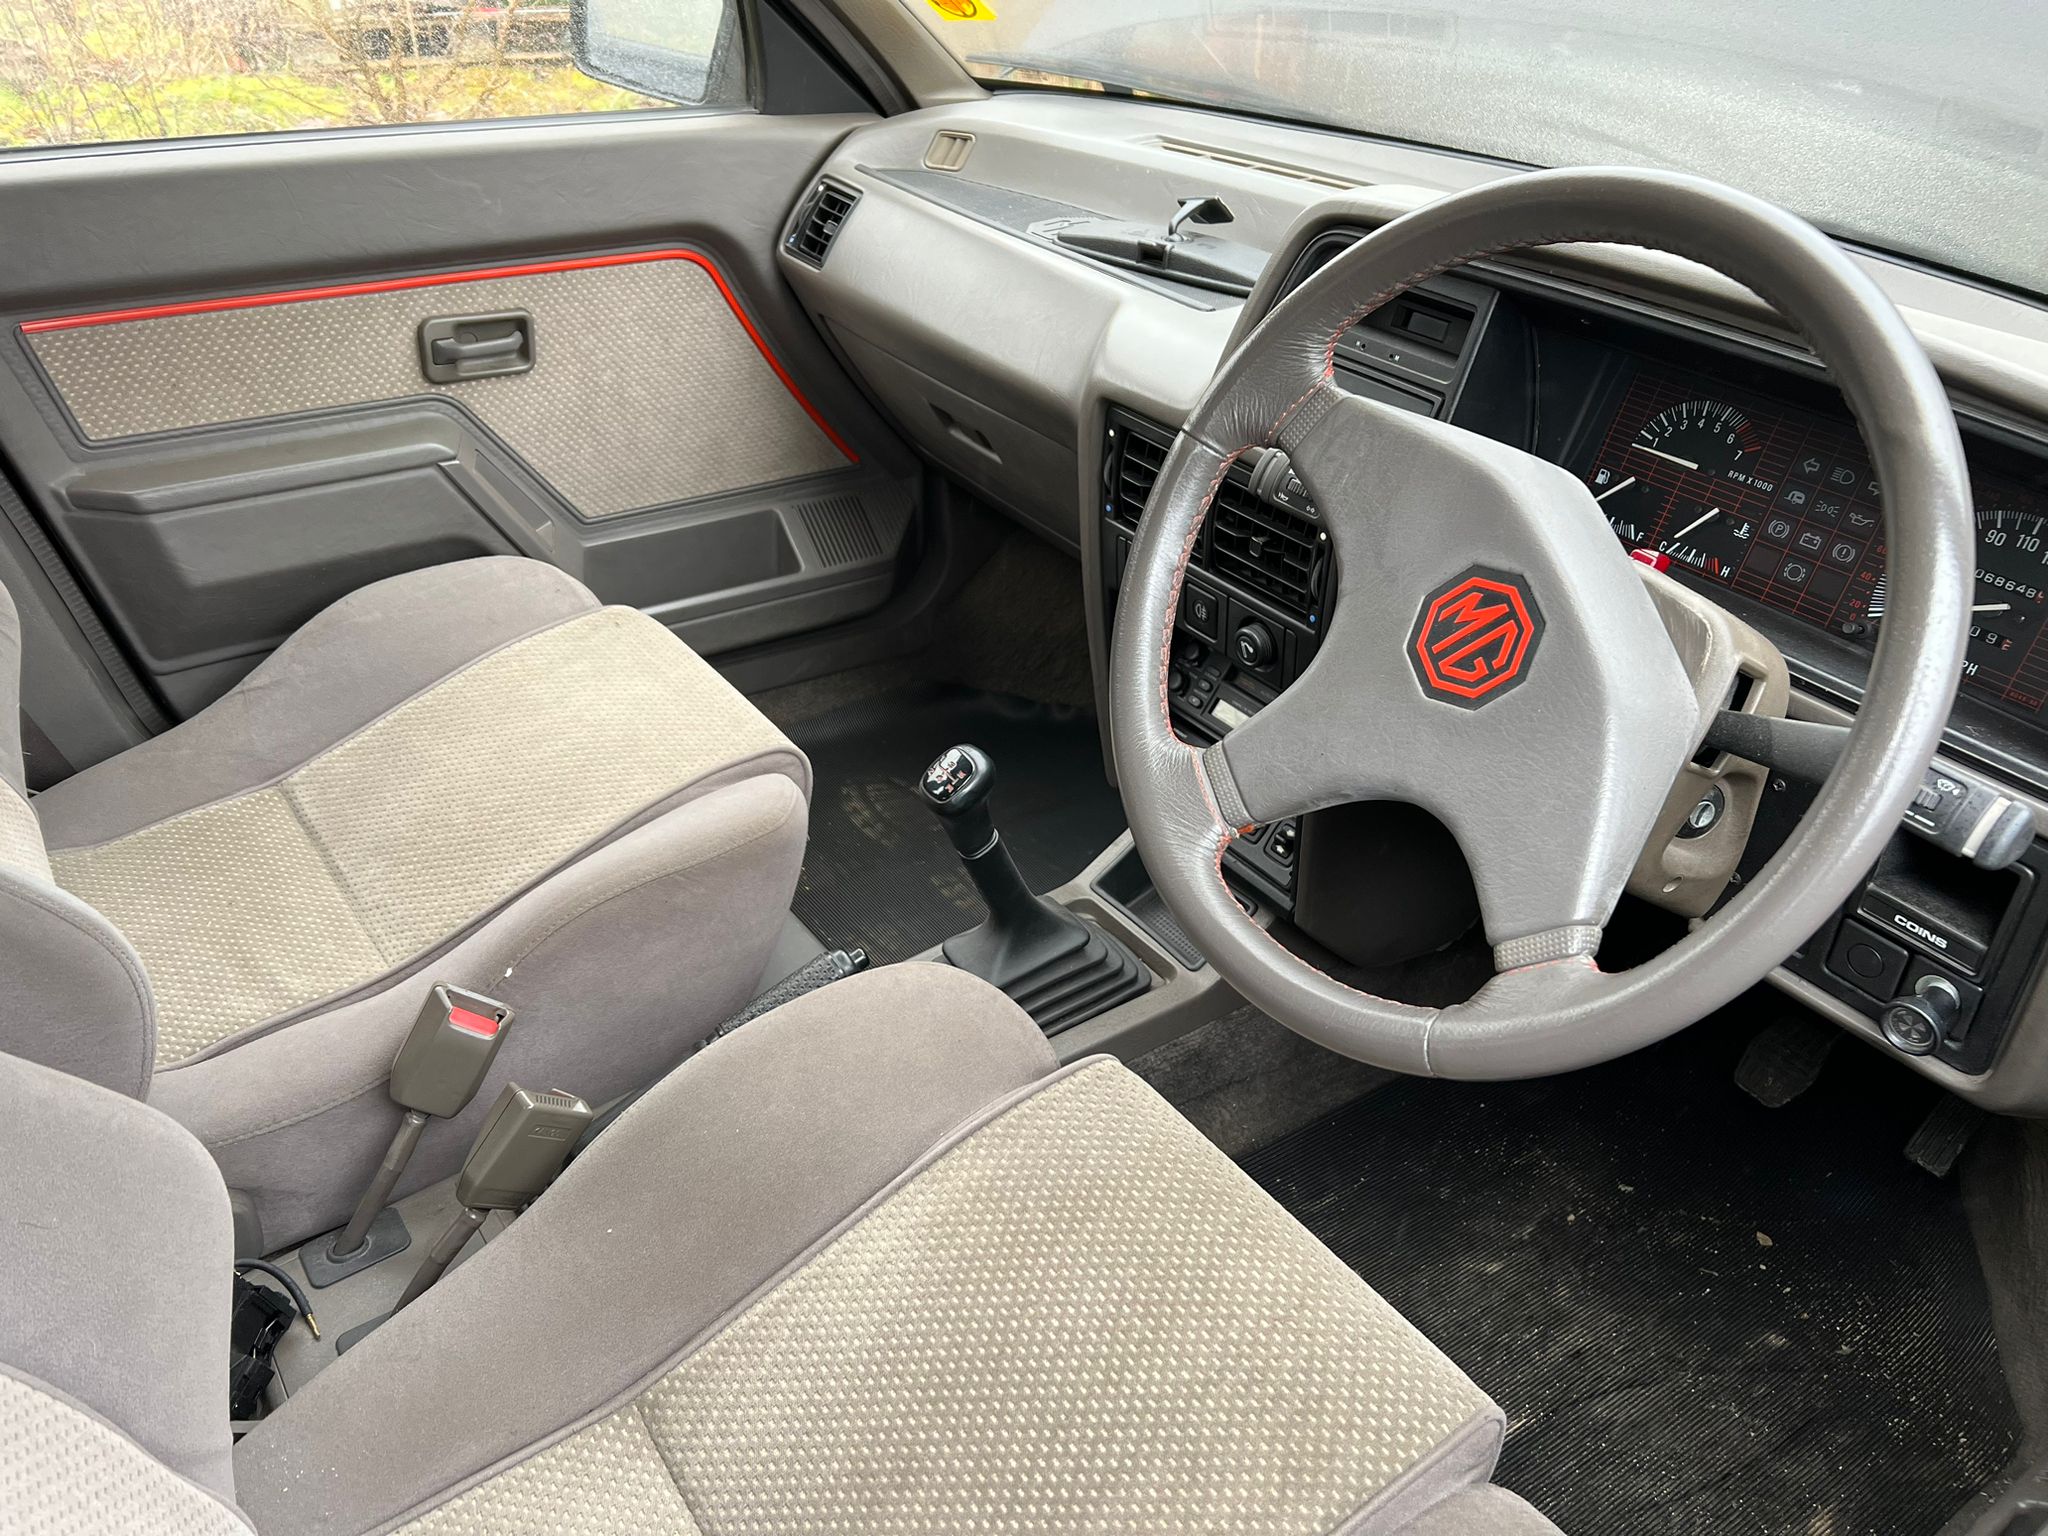 MG Montego Turbo 1988 - Image 9 of 14